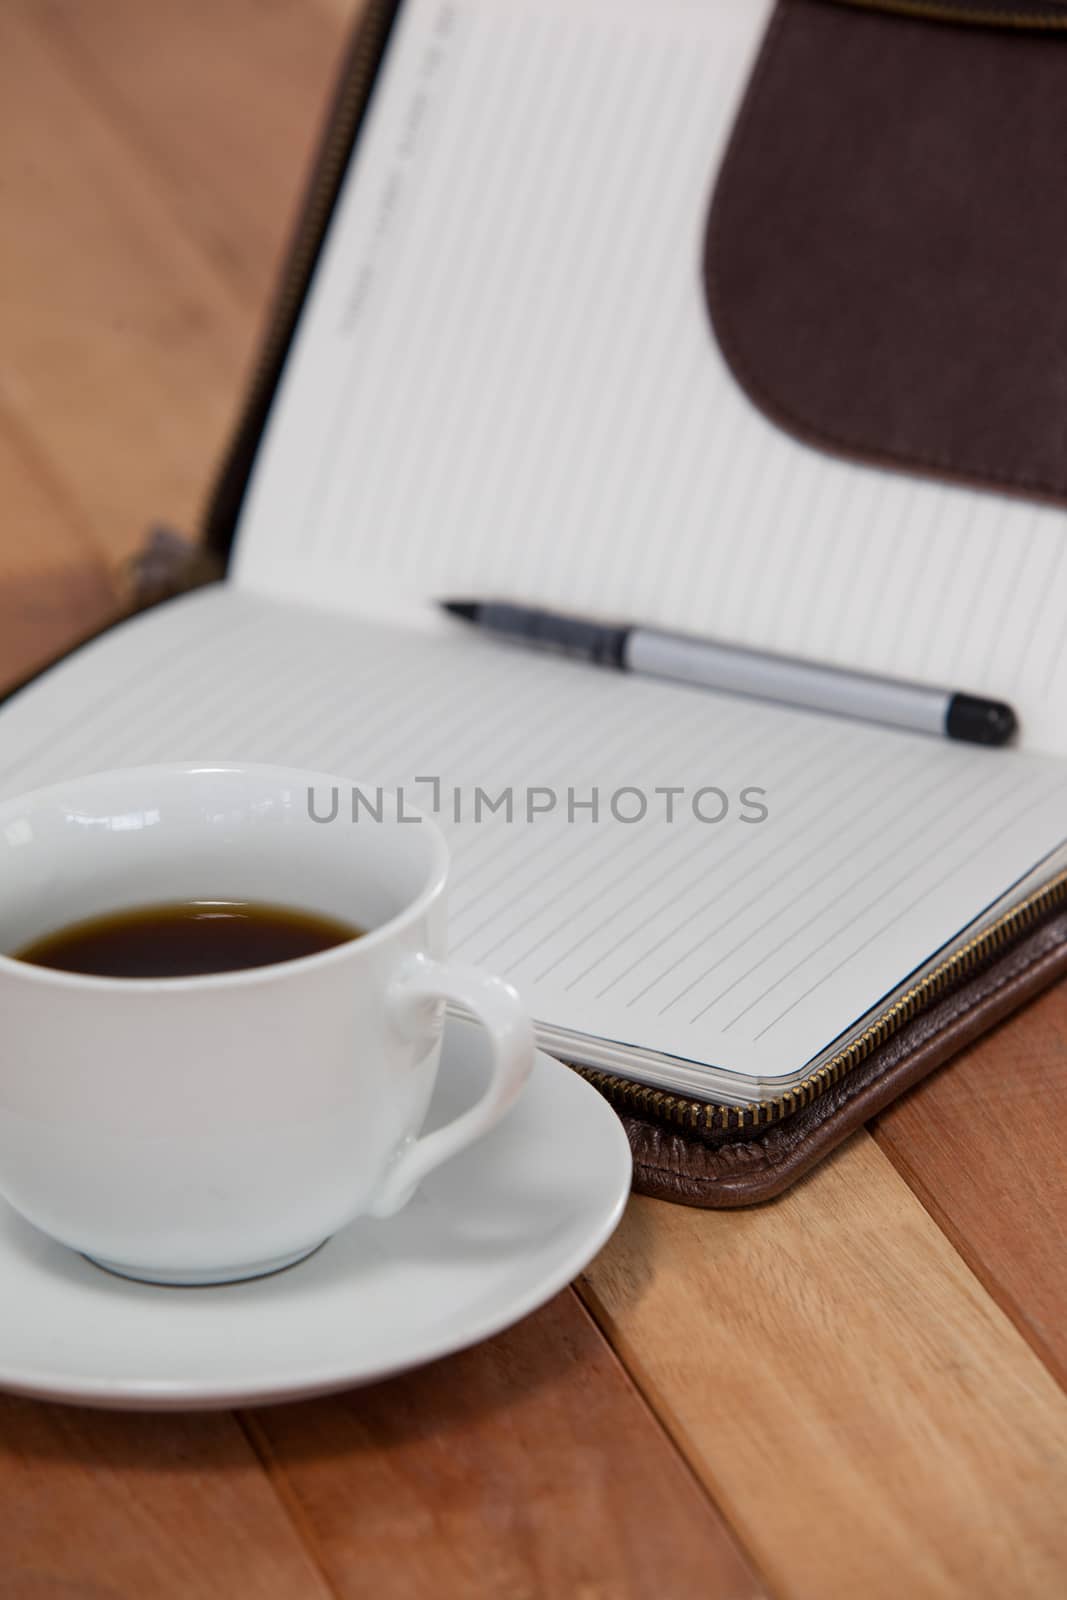 Black coffee with organizer and pen by Wavebreakmedia